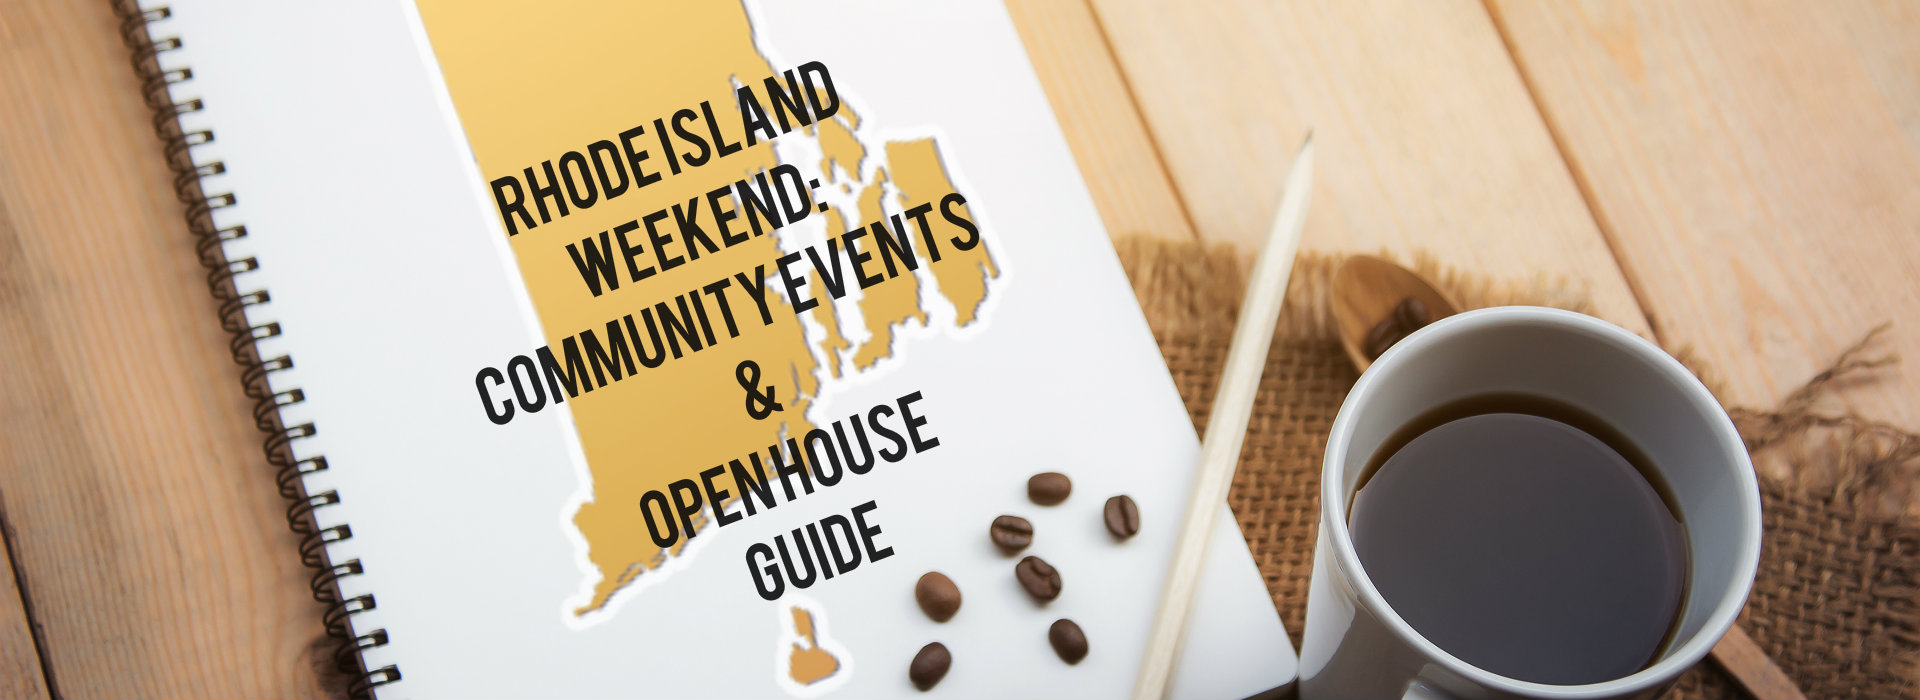 Rhode Island Open house Guide